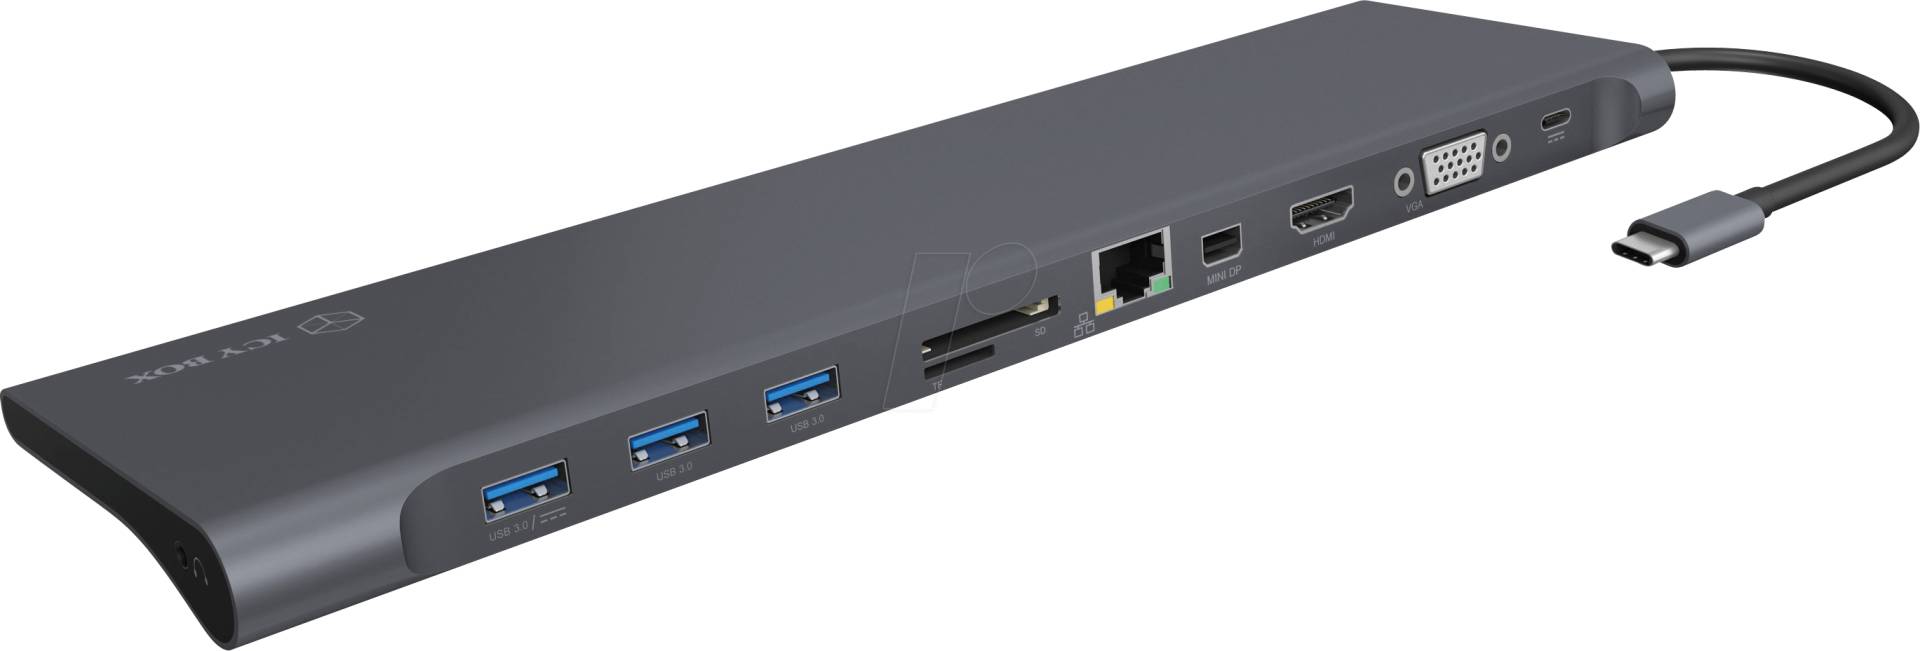 ICY IB-DK2102-C - Dockingstation/Port Replicator, USB 3.0, Laptop von Icybox